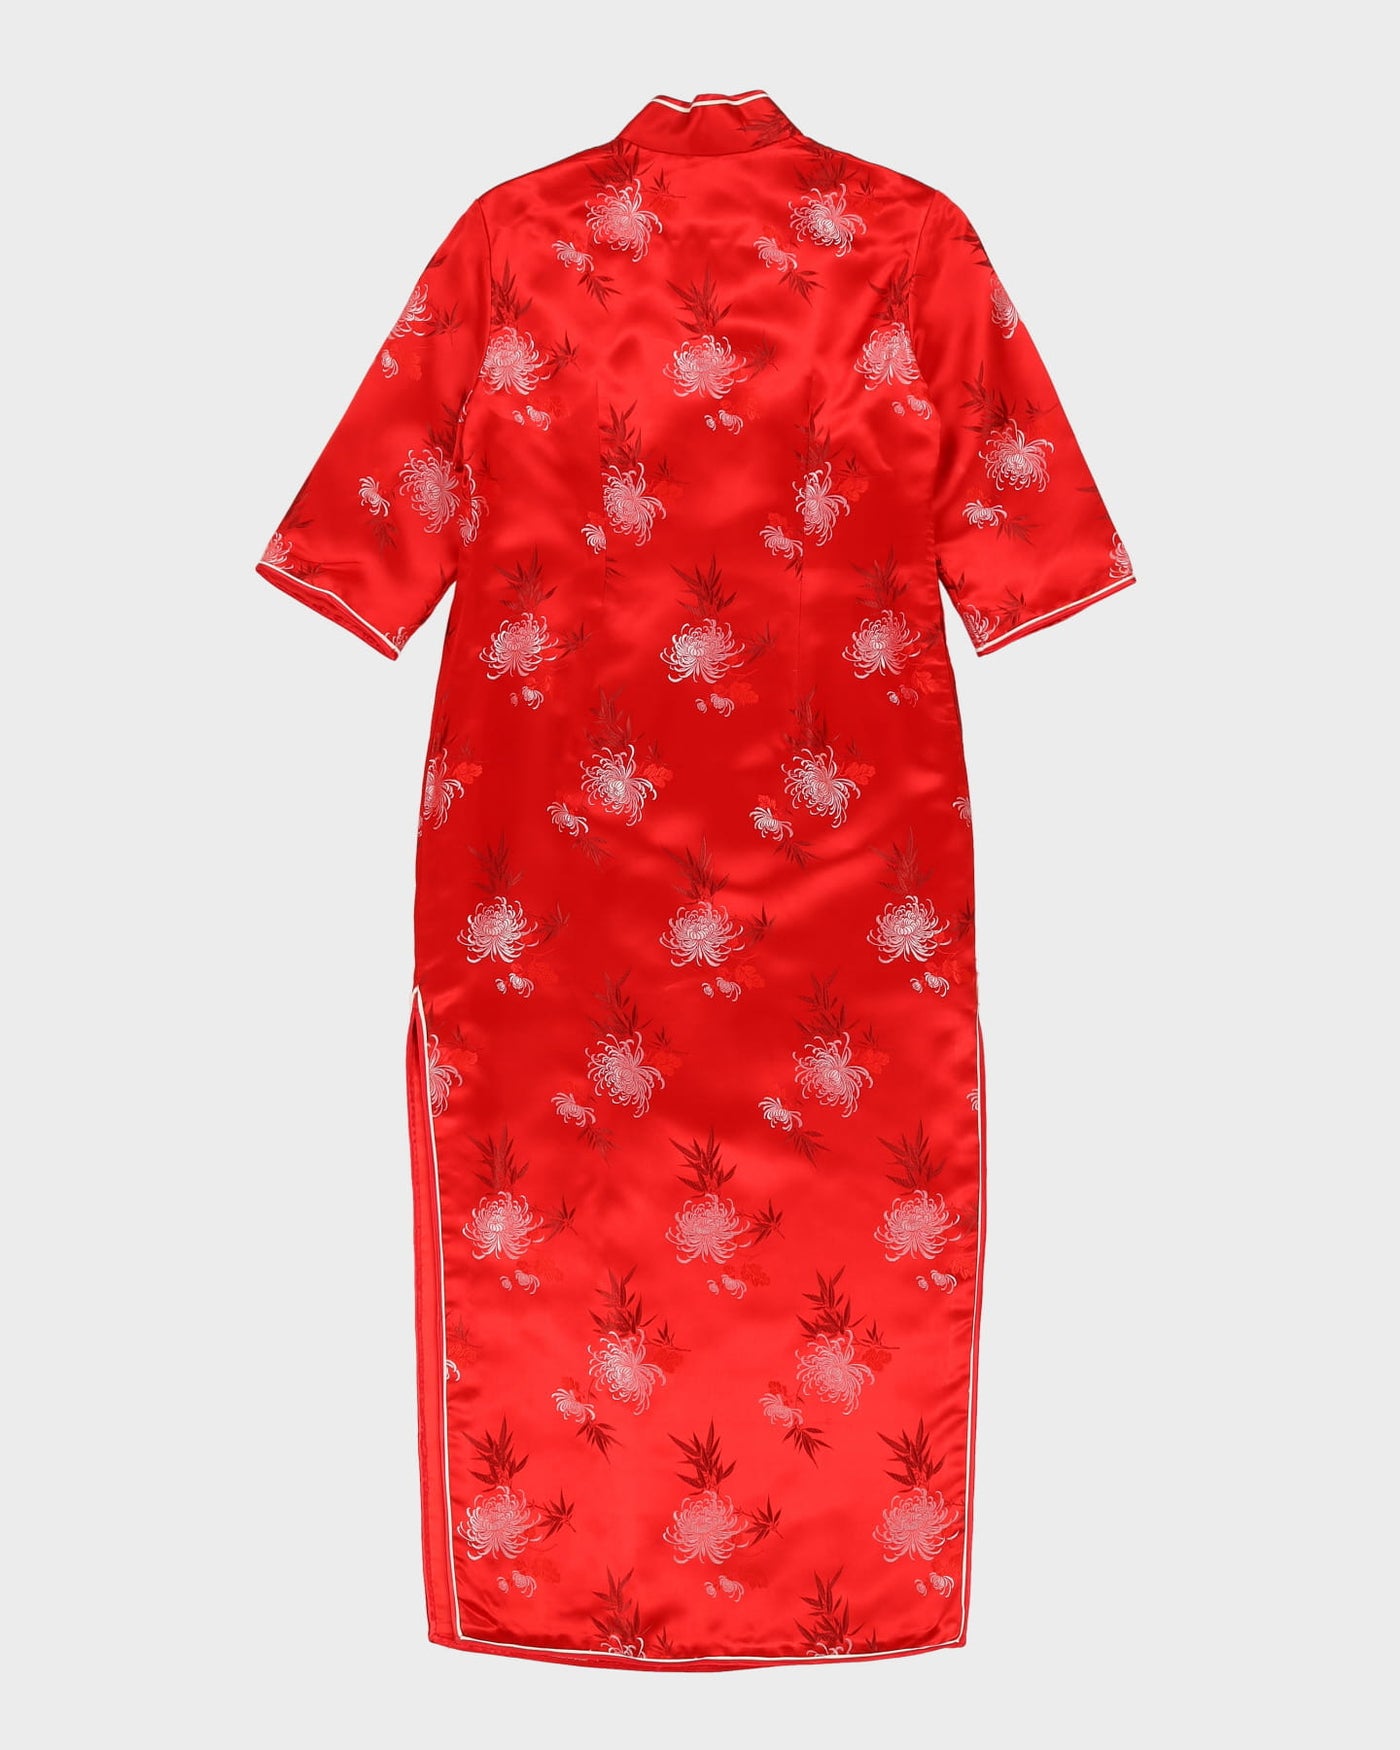 Red Brocade Cheongsam Dress - S